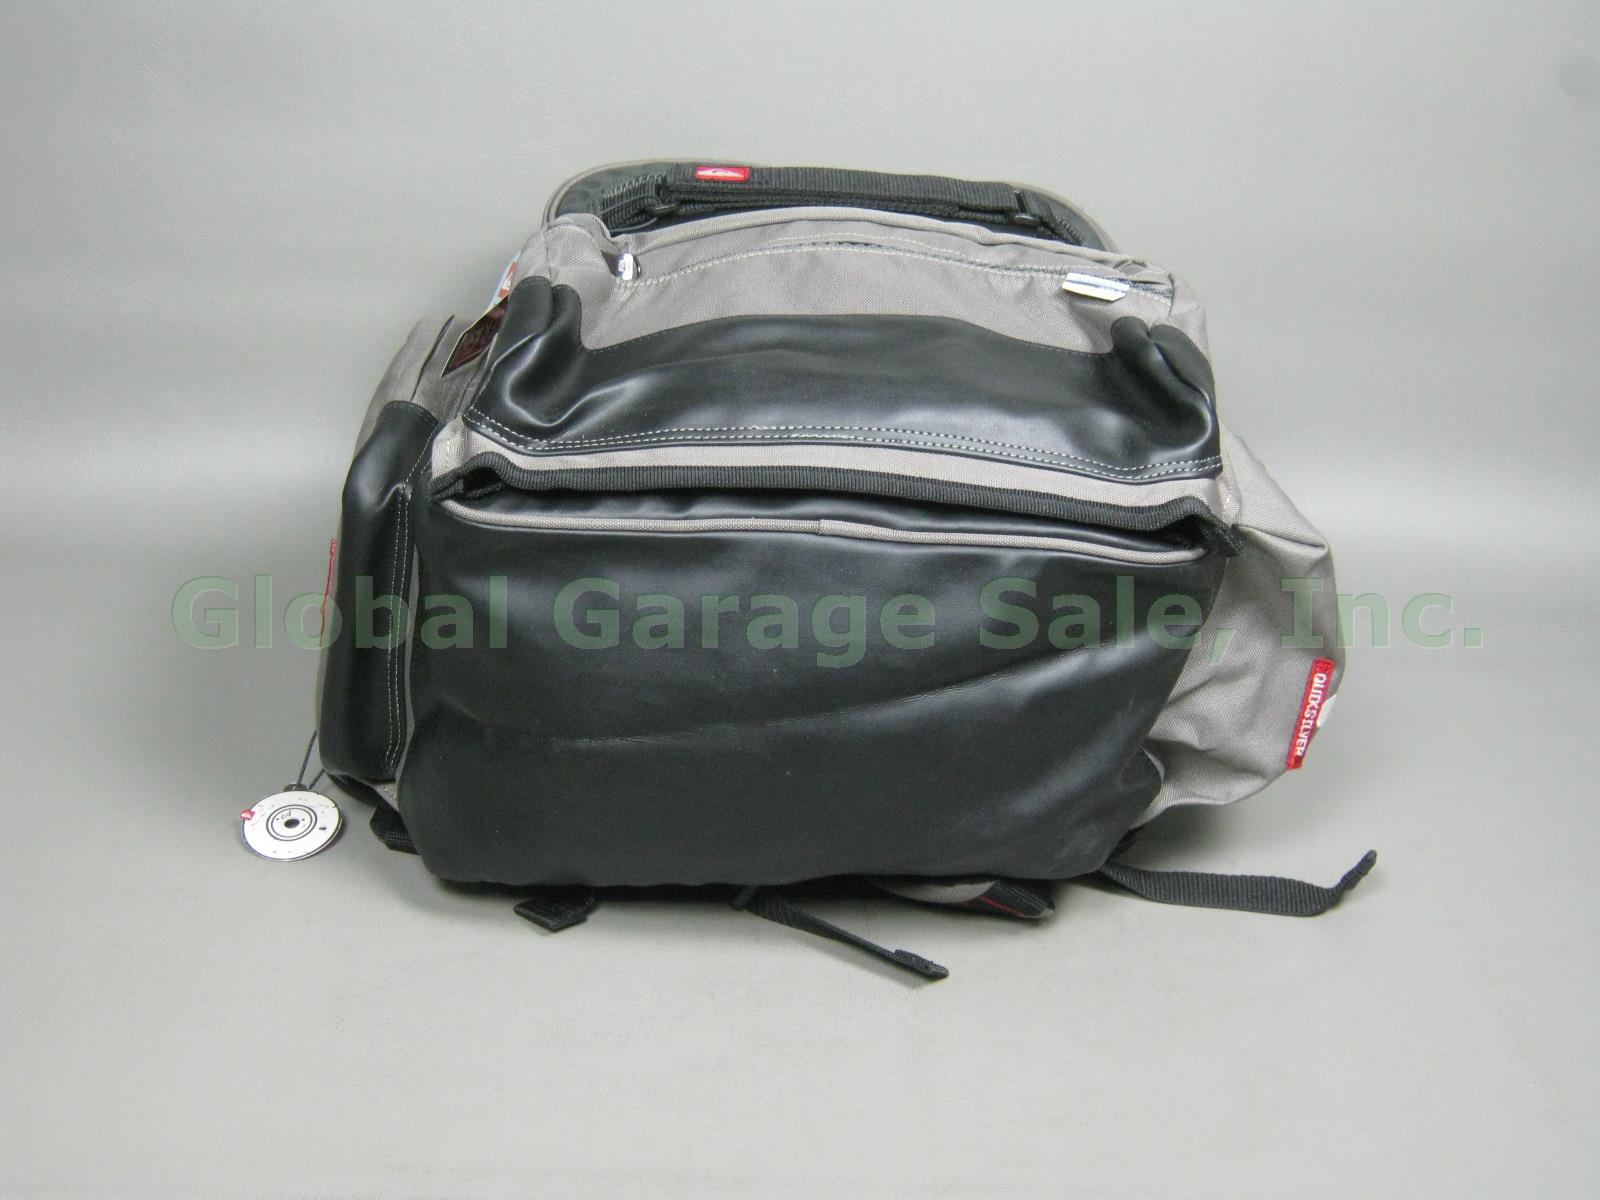 Rare NWT NOS Quiksilver City Pack Skate Bag Backpack Manufacturer Sample No Res! 7